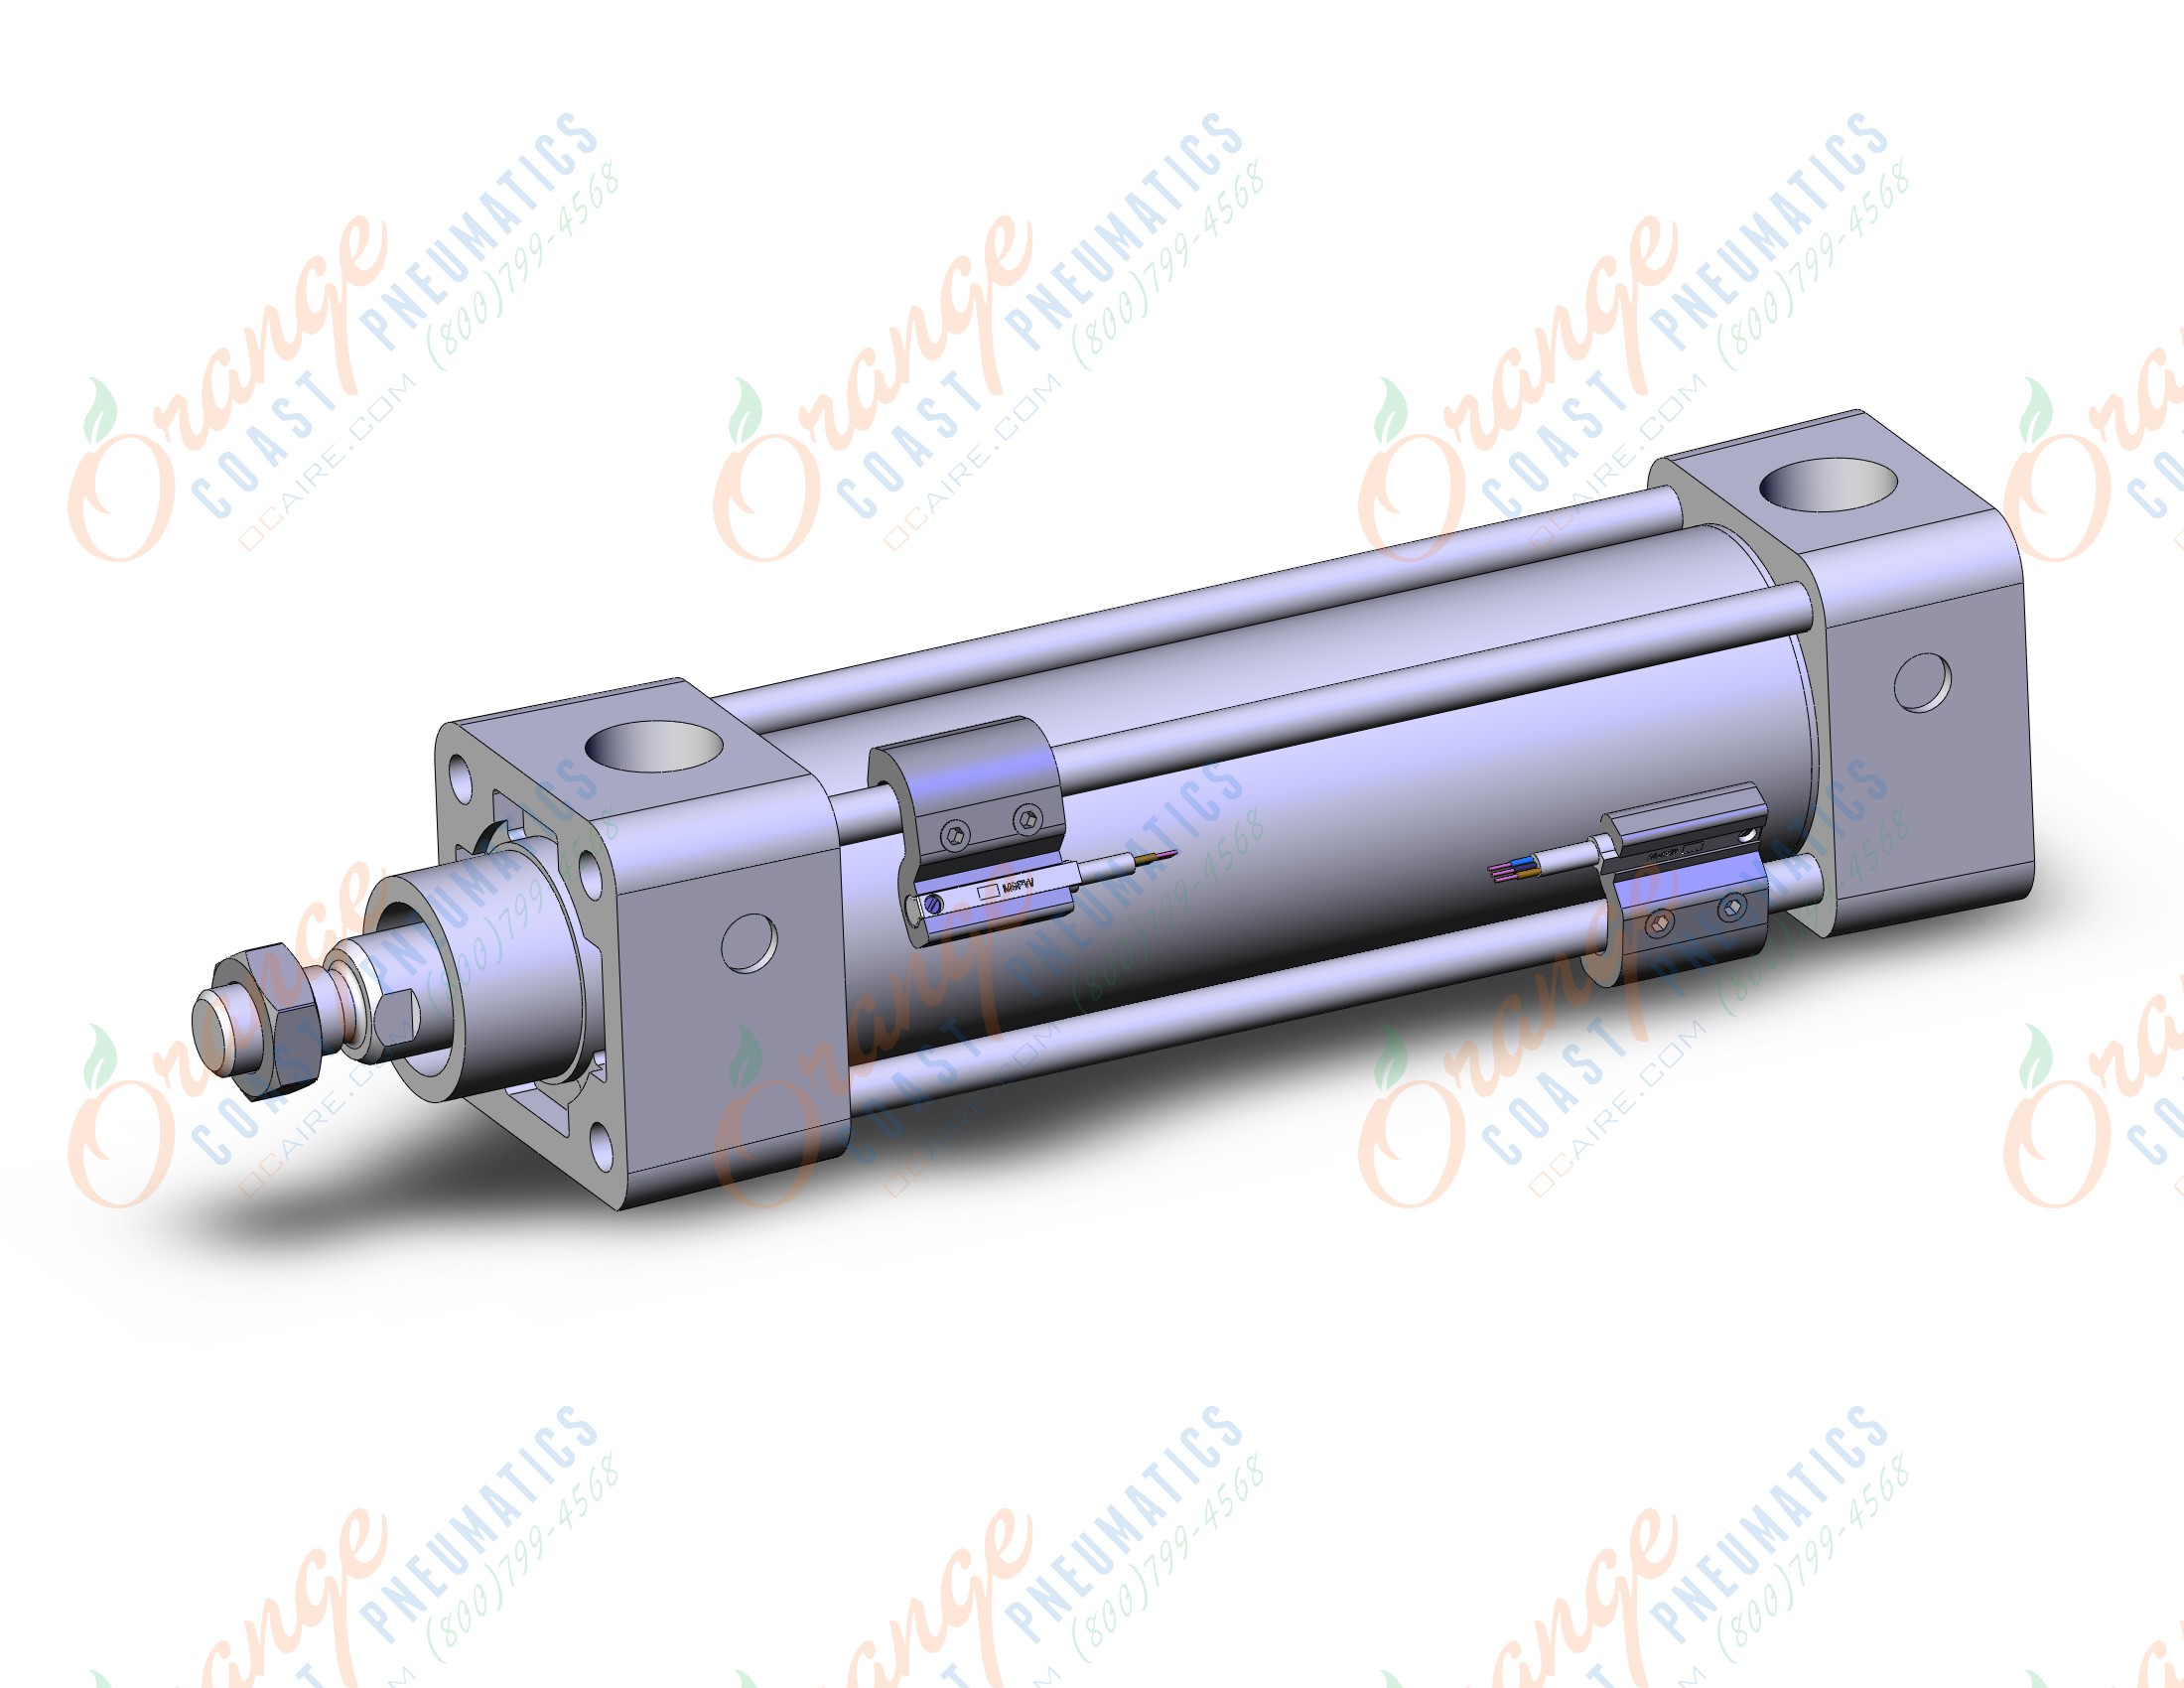 SMC NCDA1B150-0400-M9PWSDPC cylinder, nca1, tie rod, TIE ROD CYLINDER